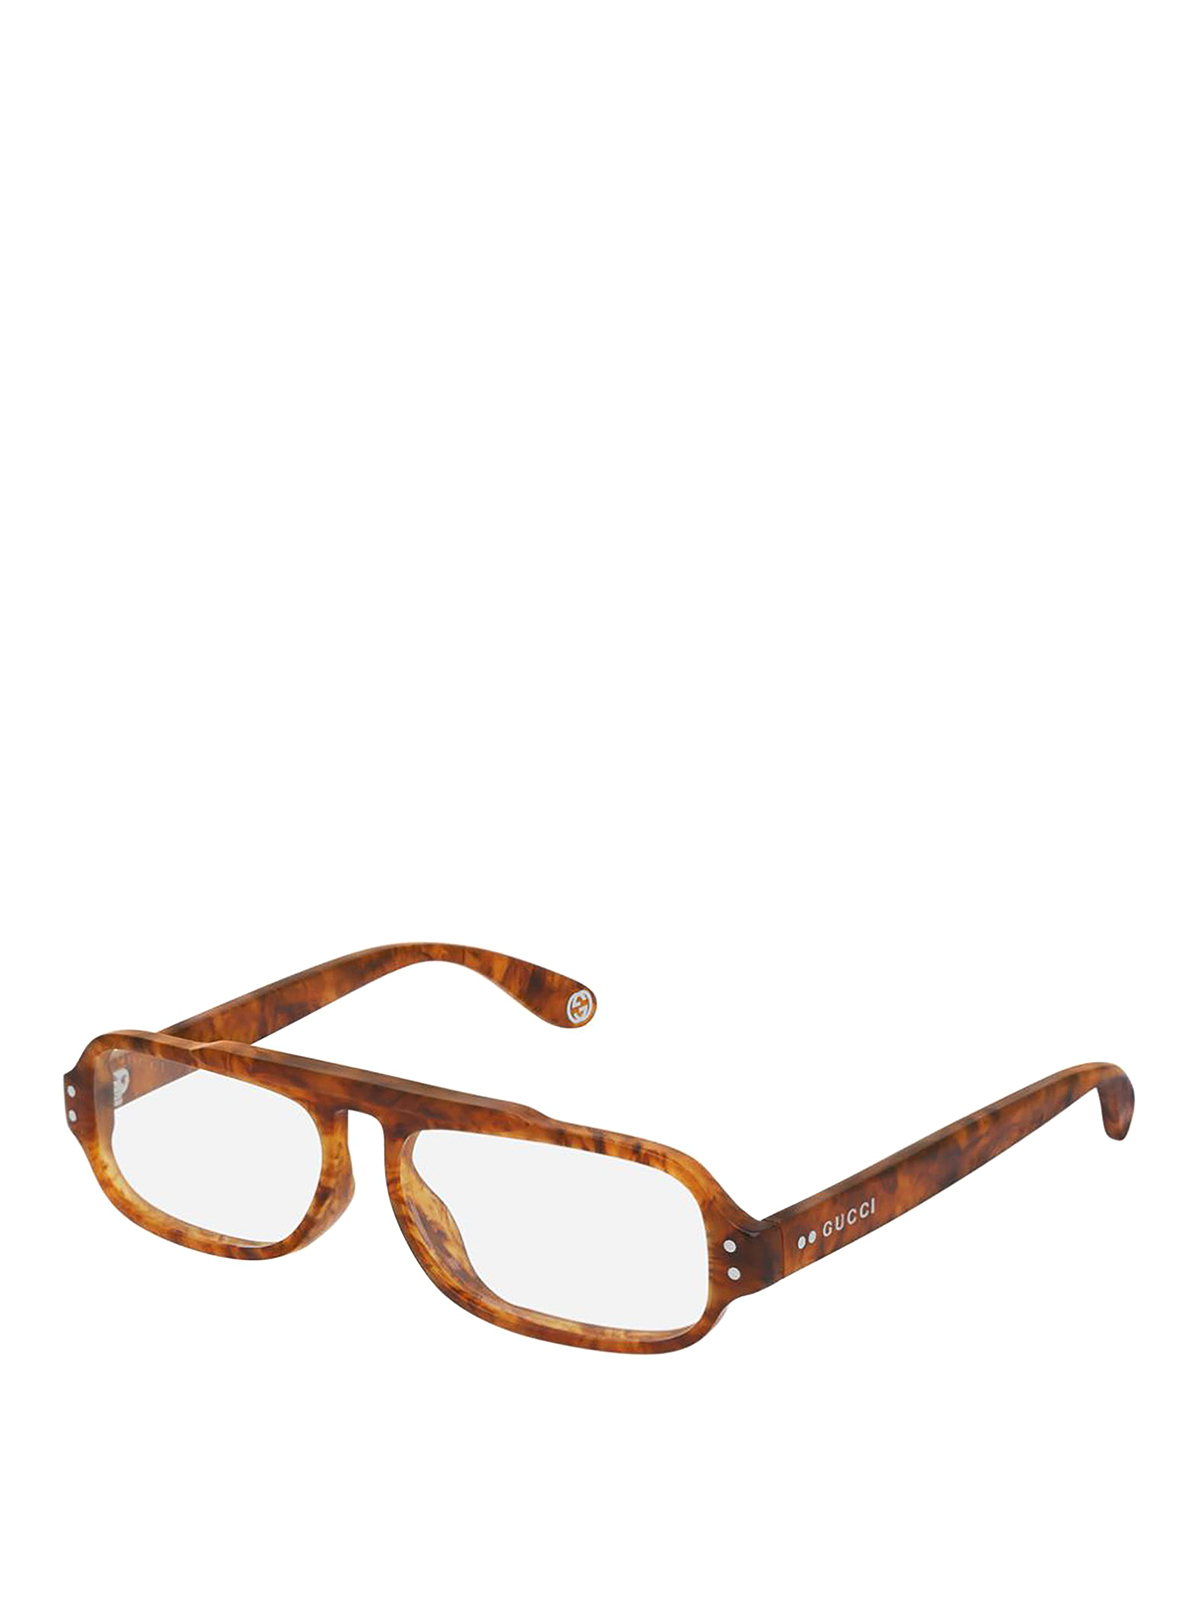 Glasses Gucci Tortoise Acetate Retro Eyeglasses Gg0615s001